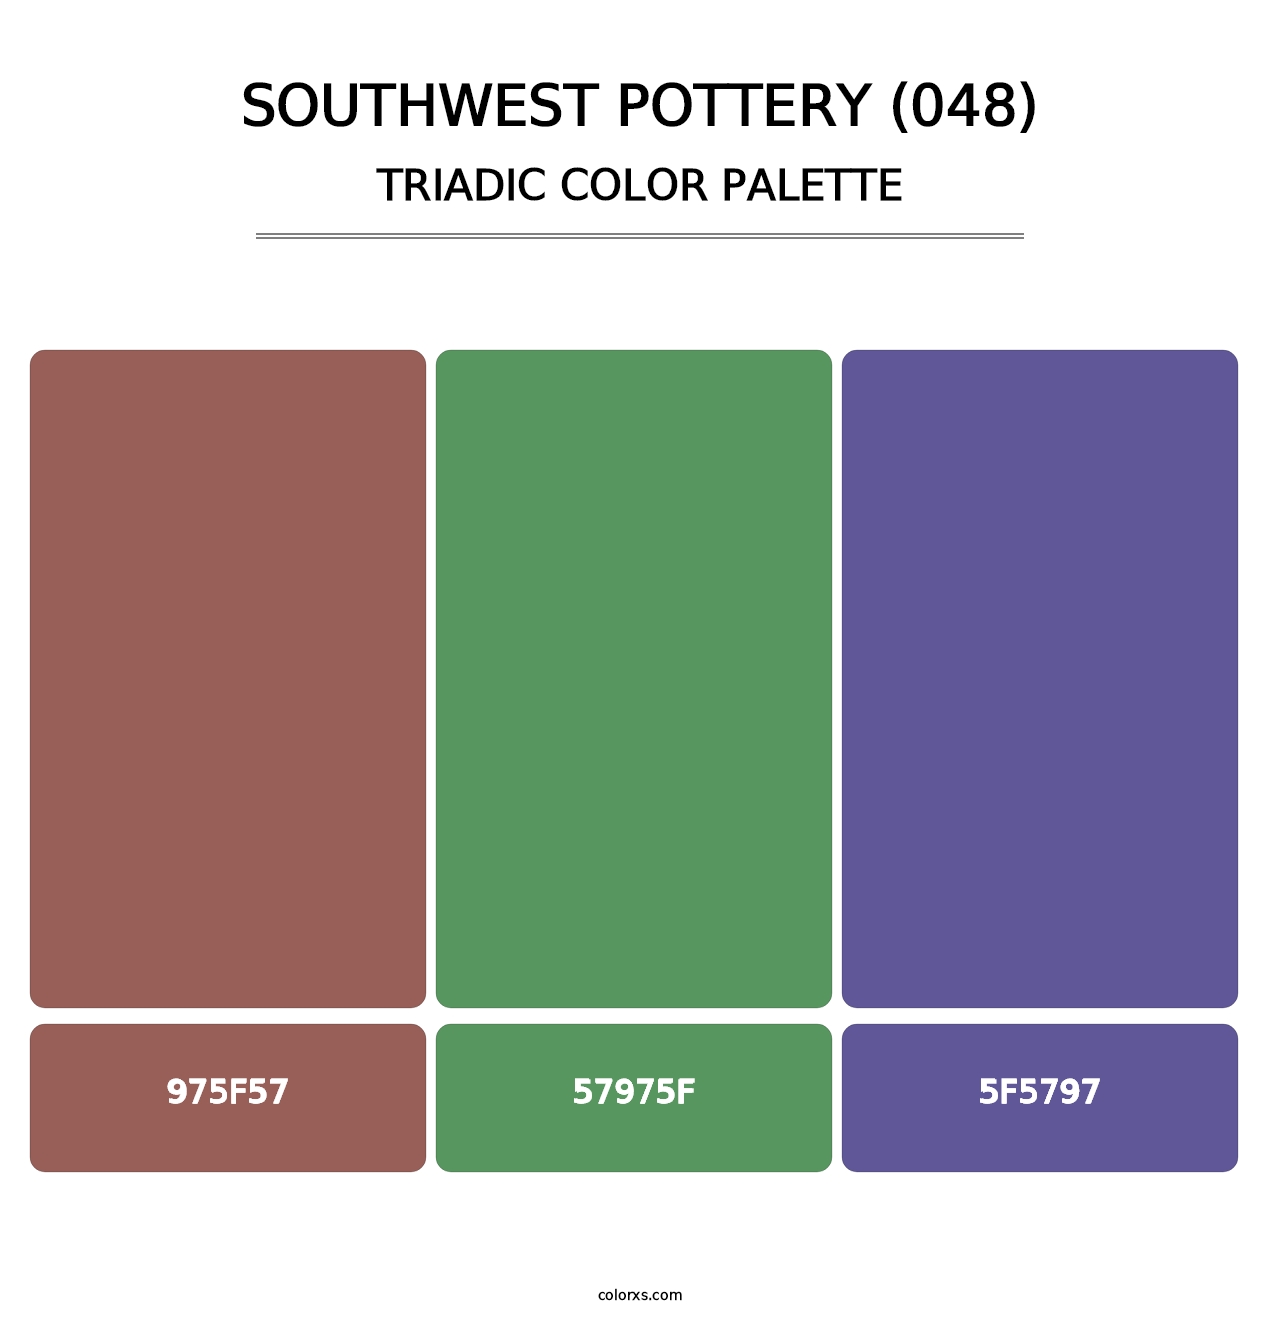 Southwest Pottery (048) - Triadic Color Palette